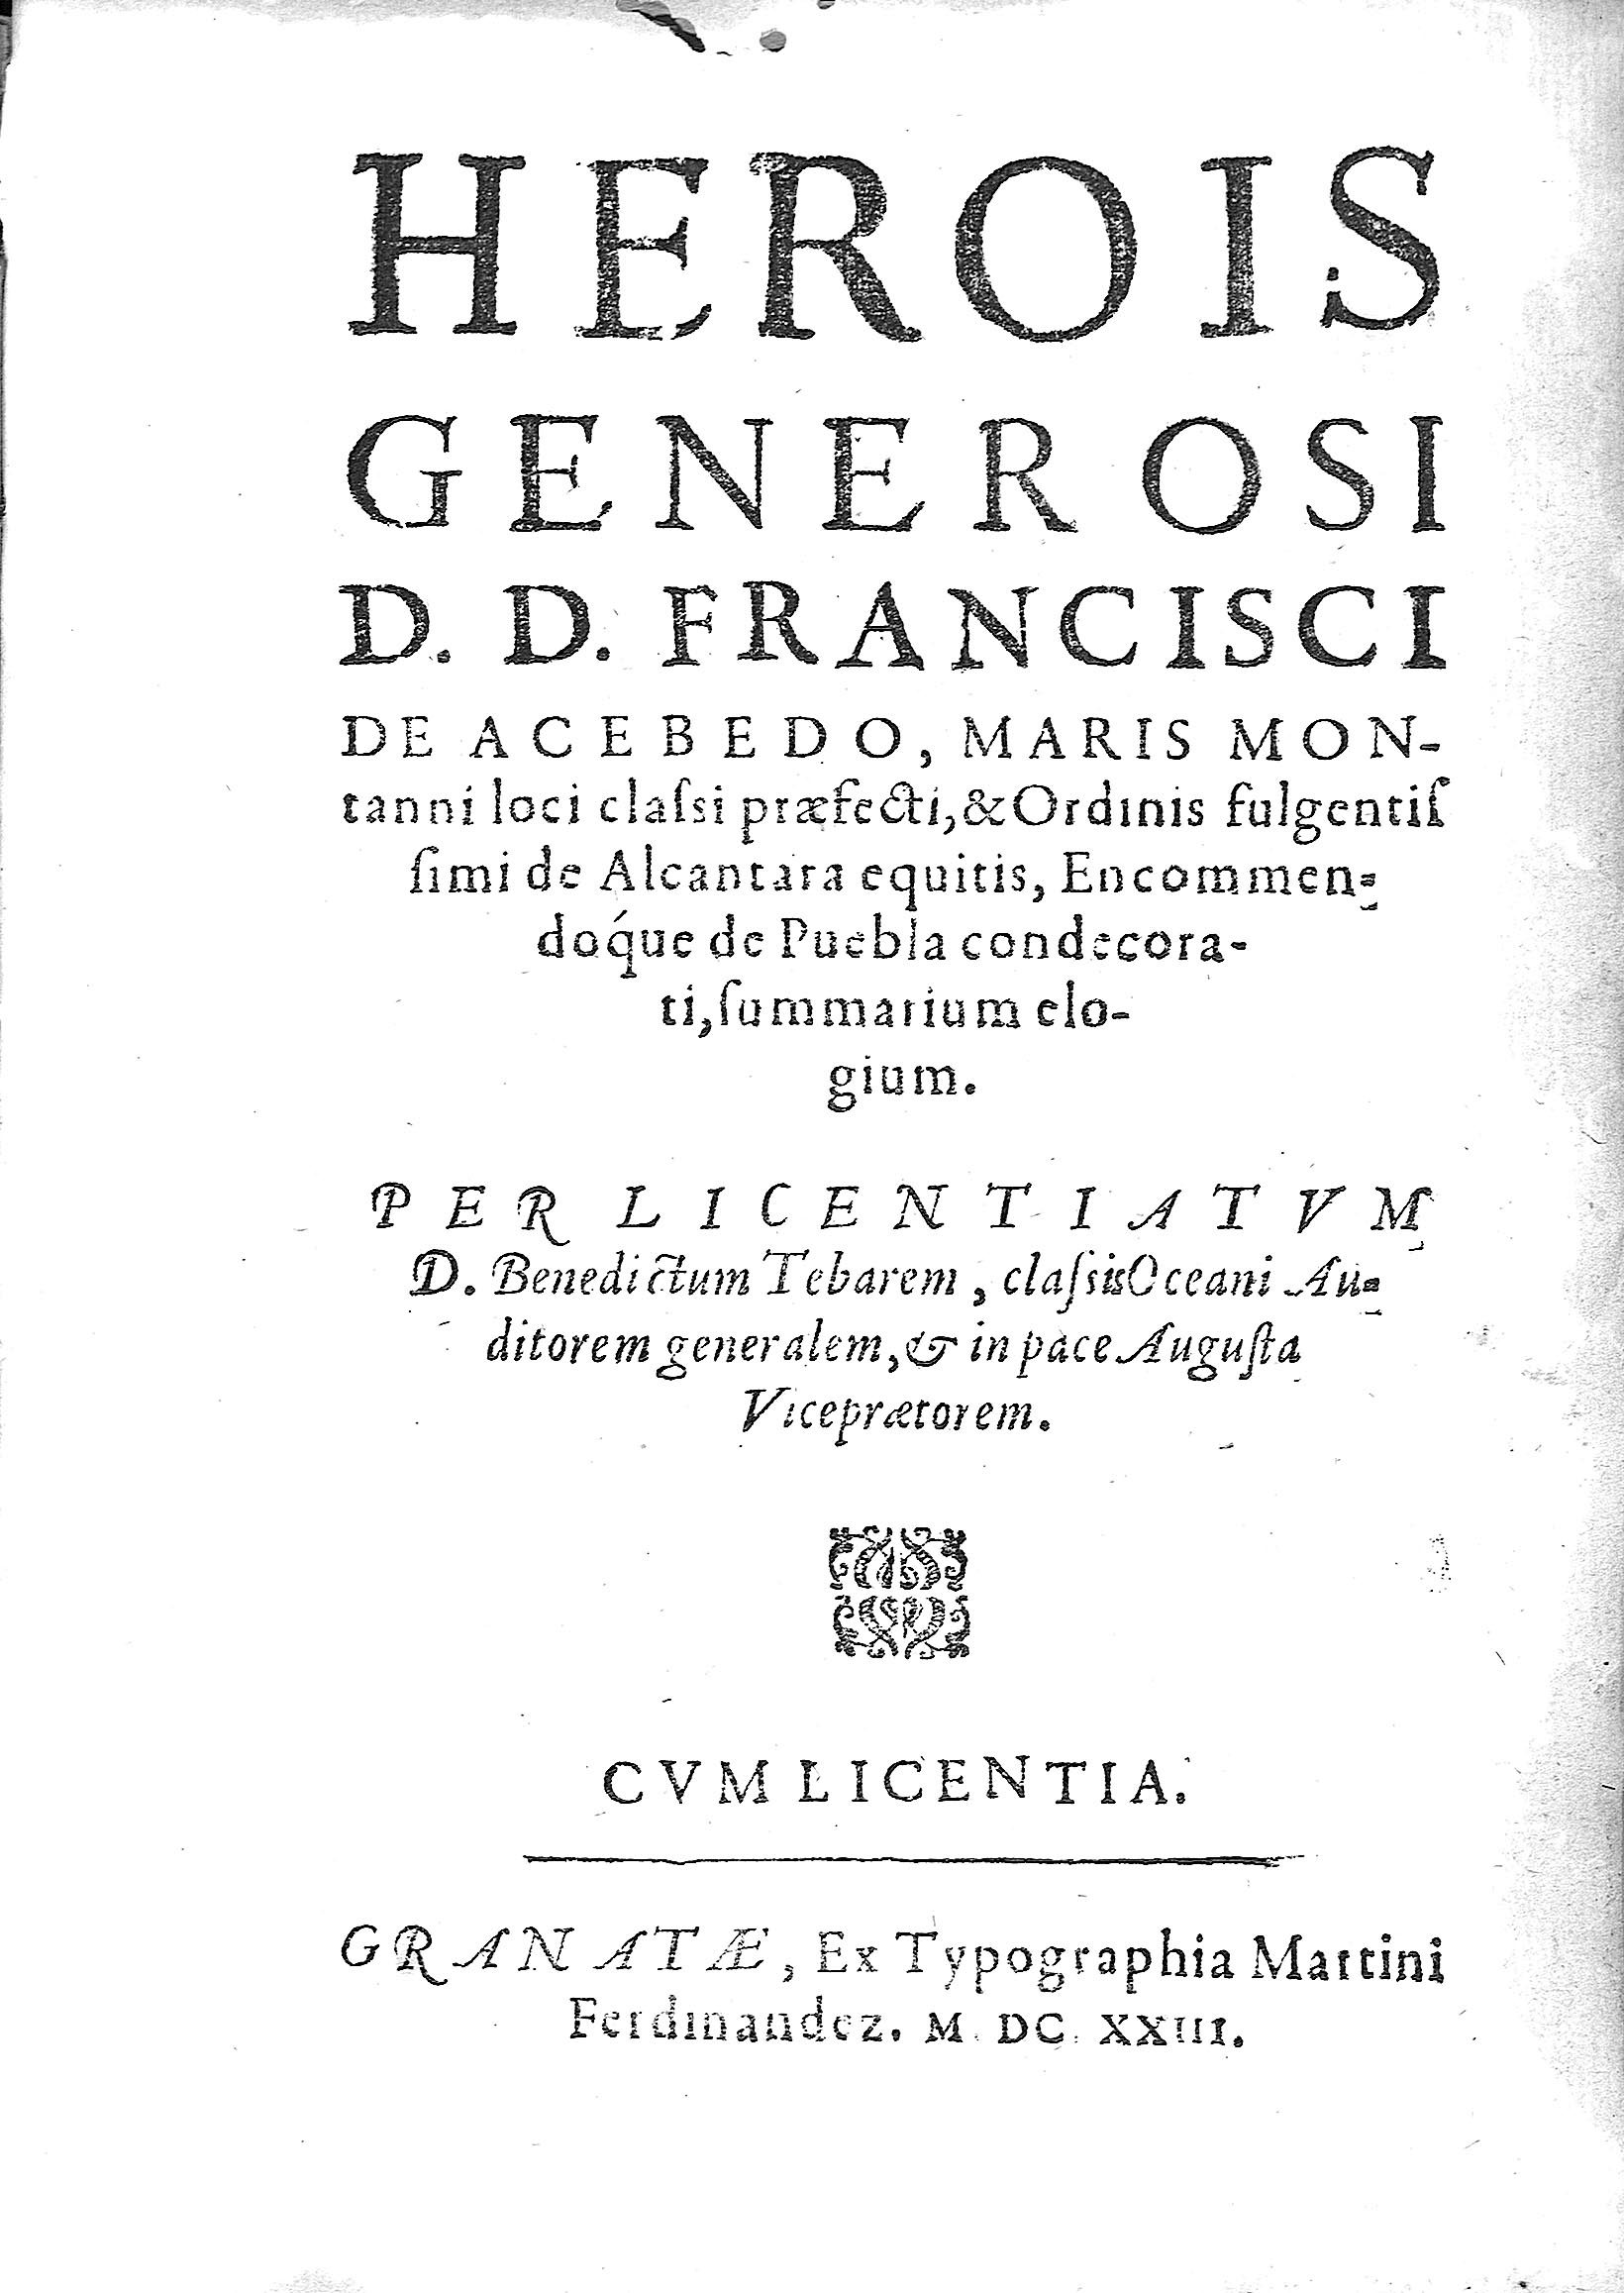 Herois generosi D. D. Francisci de Aceredo,...